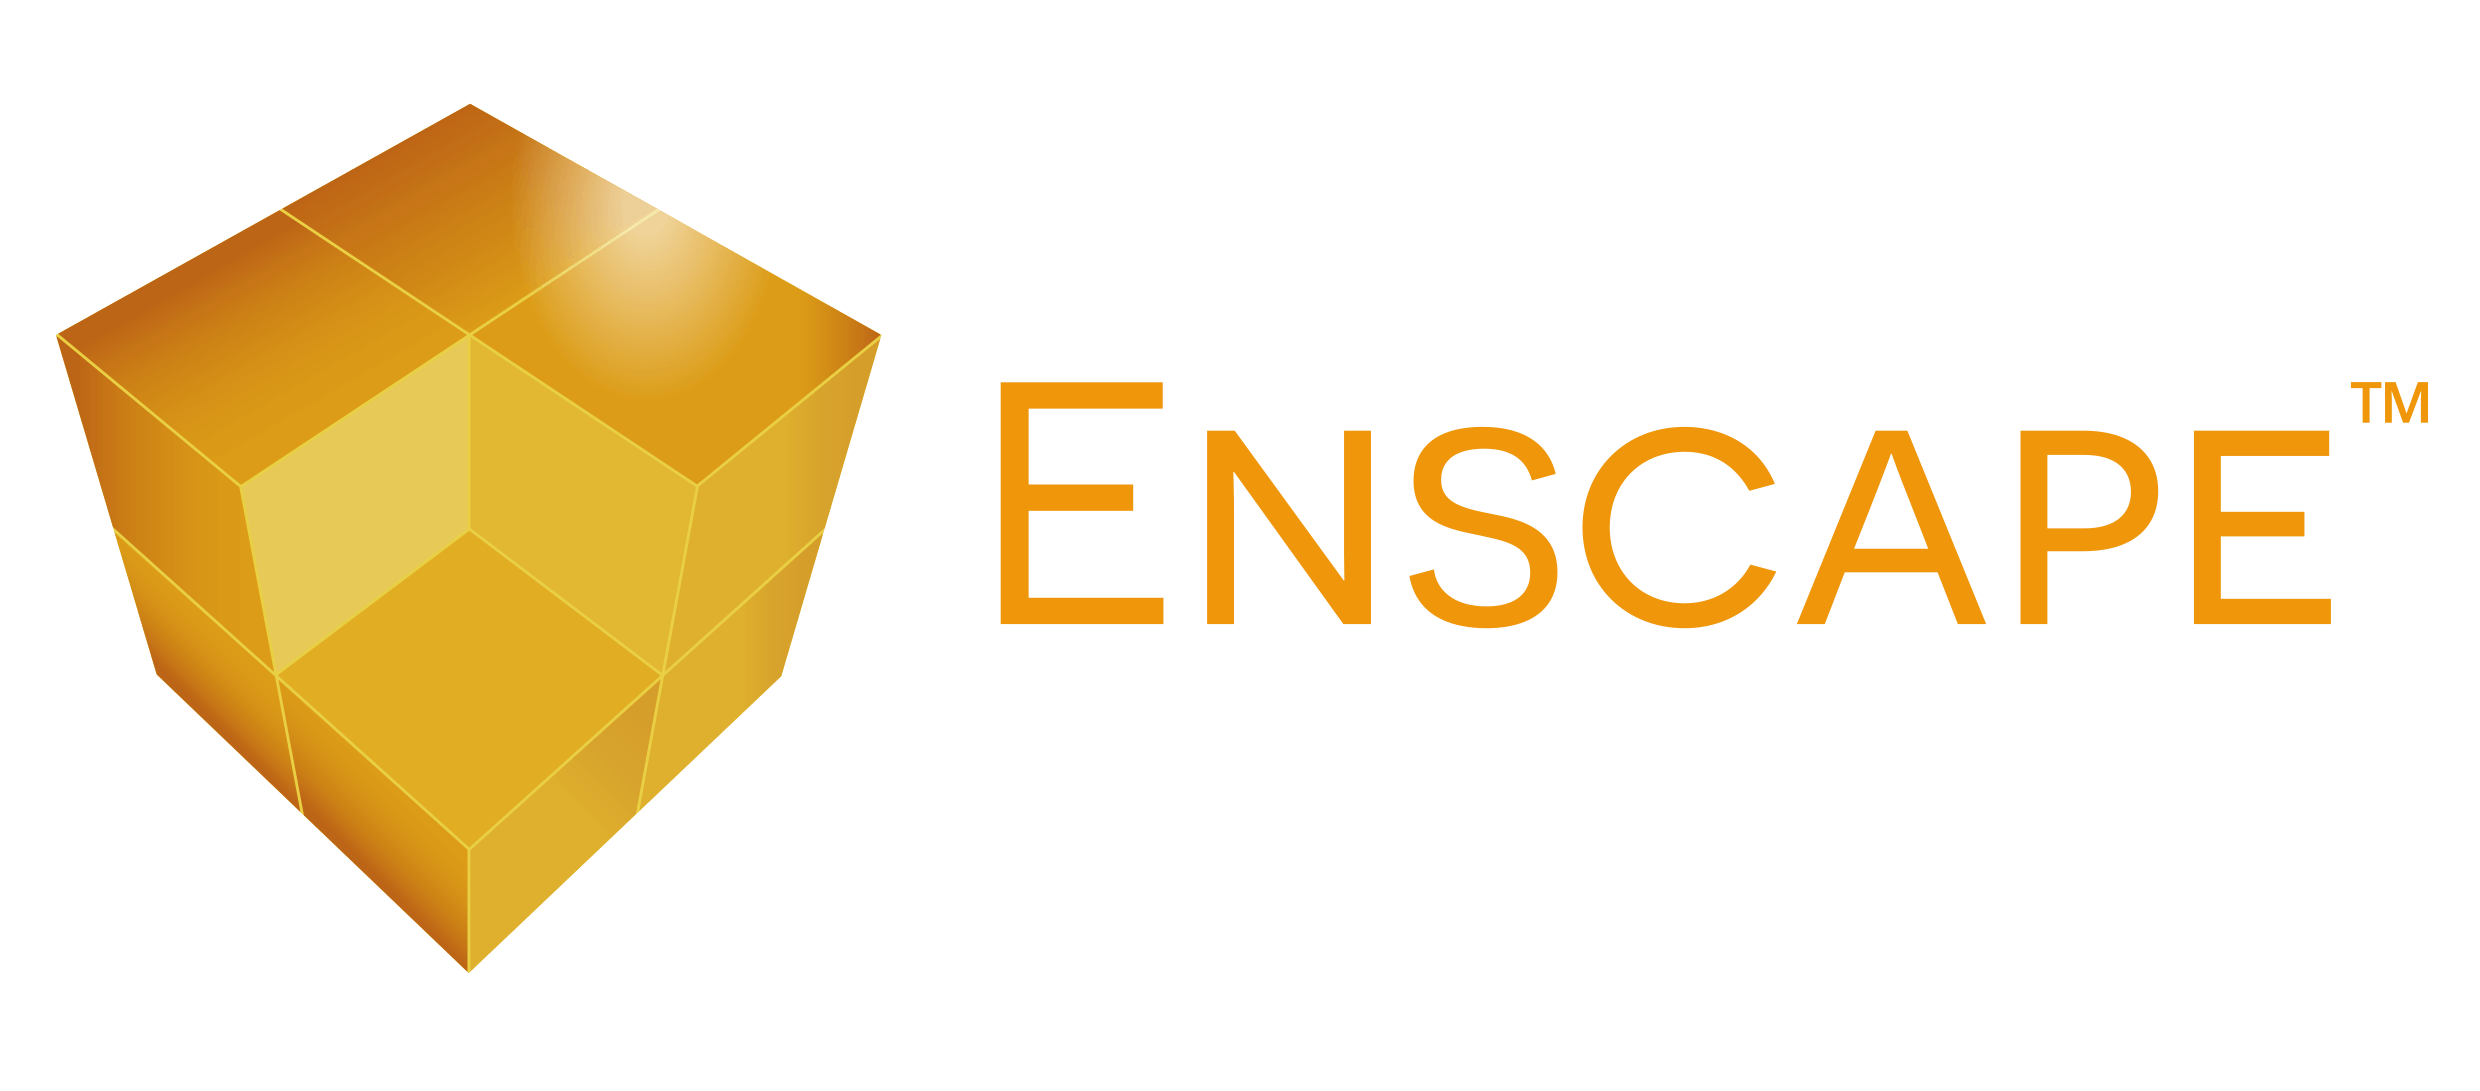 Enscape Logo - Enscape Logo